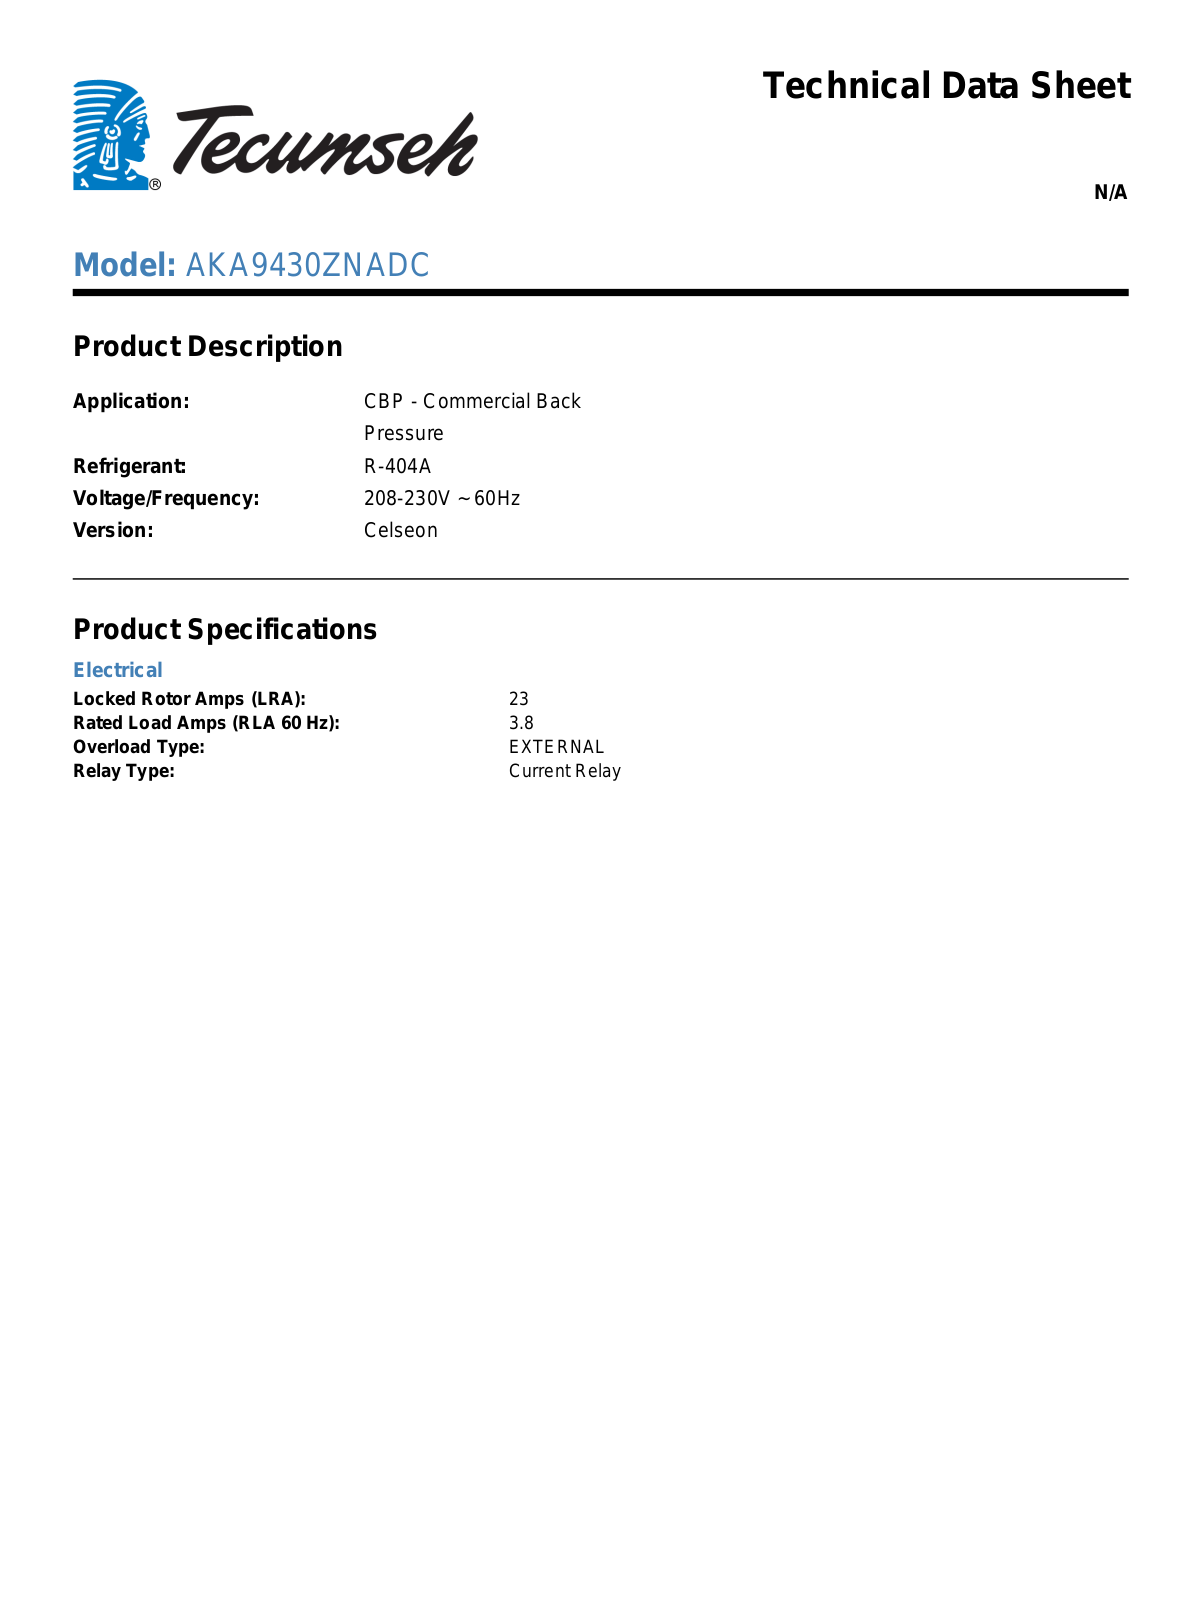 Tecumseh AKA9430ZNADC User Manual